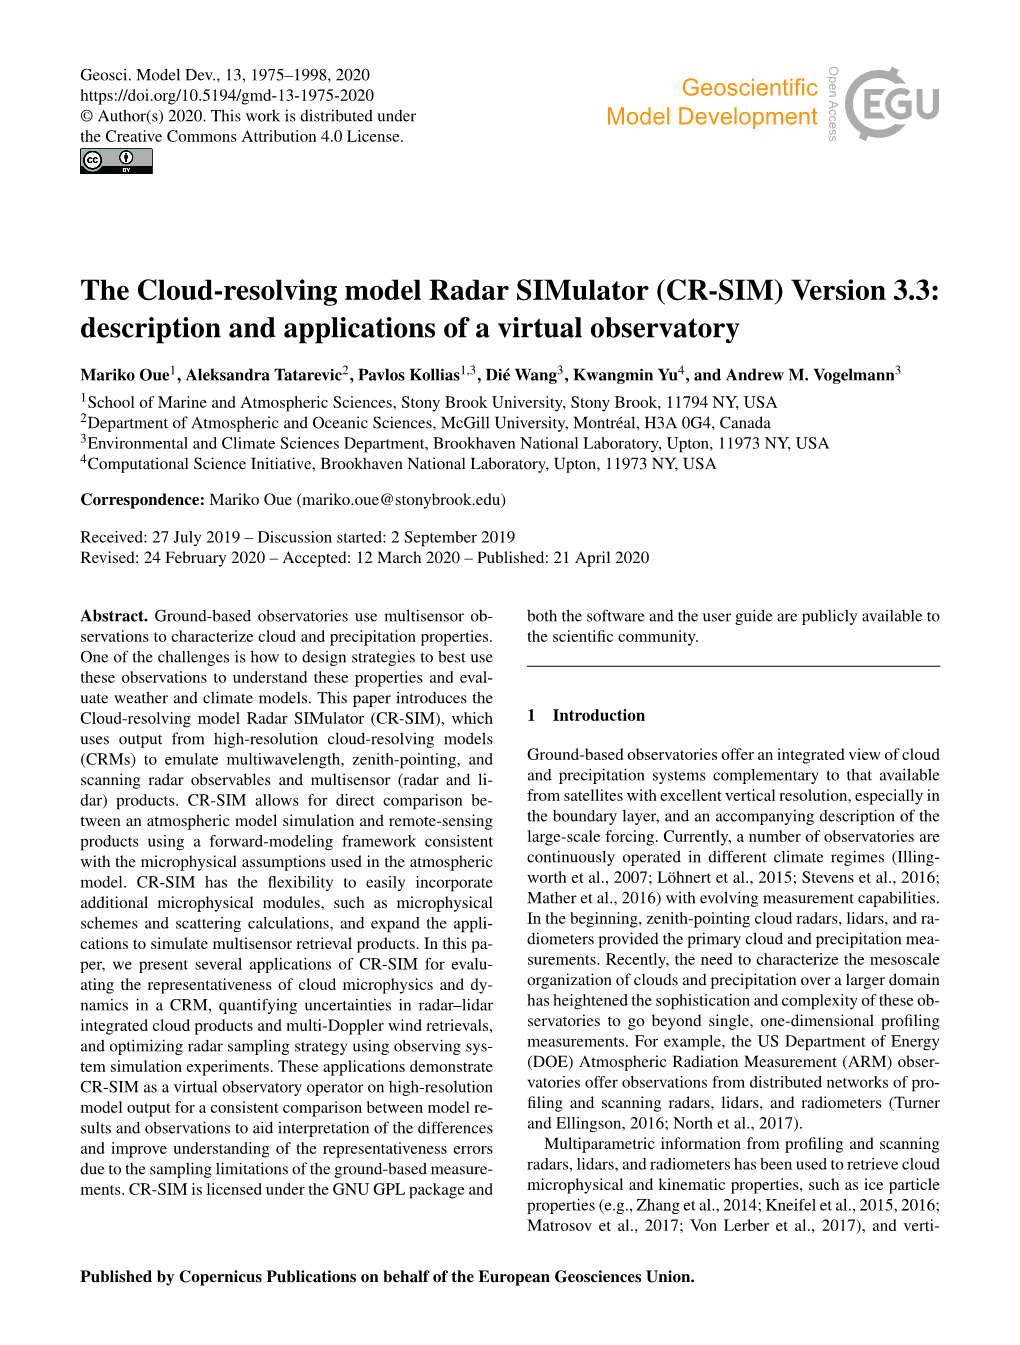 The Cloud-Resolving Model Radar Simulator (CR-SIM) Version 3.3: Description and Applications of a Virtual Observatory